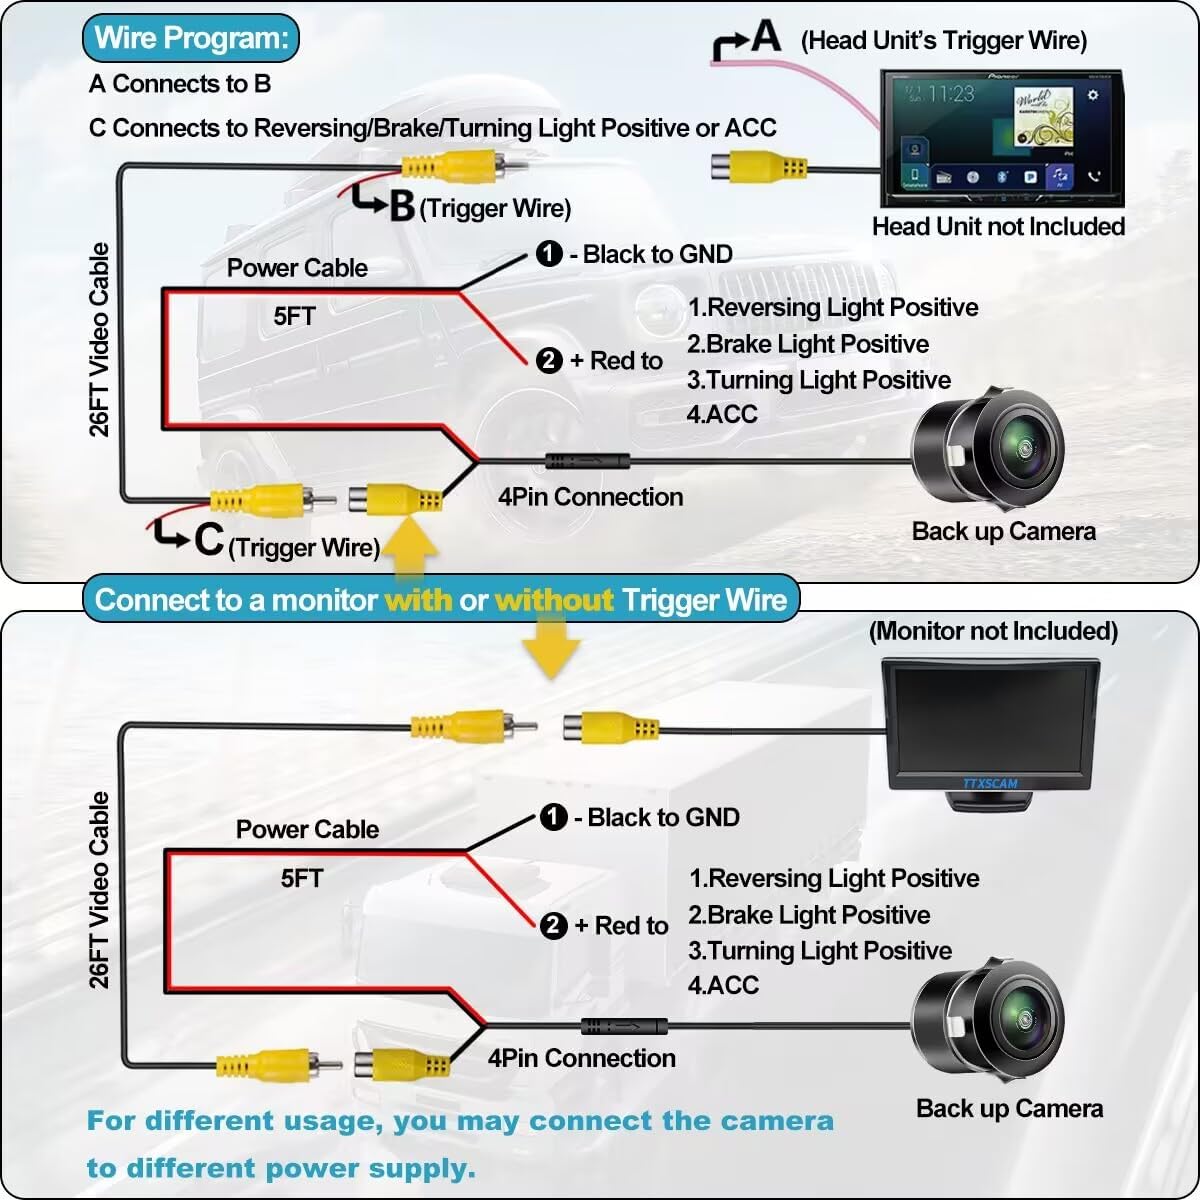 AHD 1080P Backup Camera - Universal Flush Mount for Cars, Pickup 